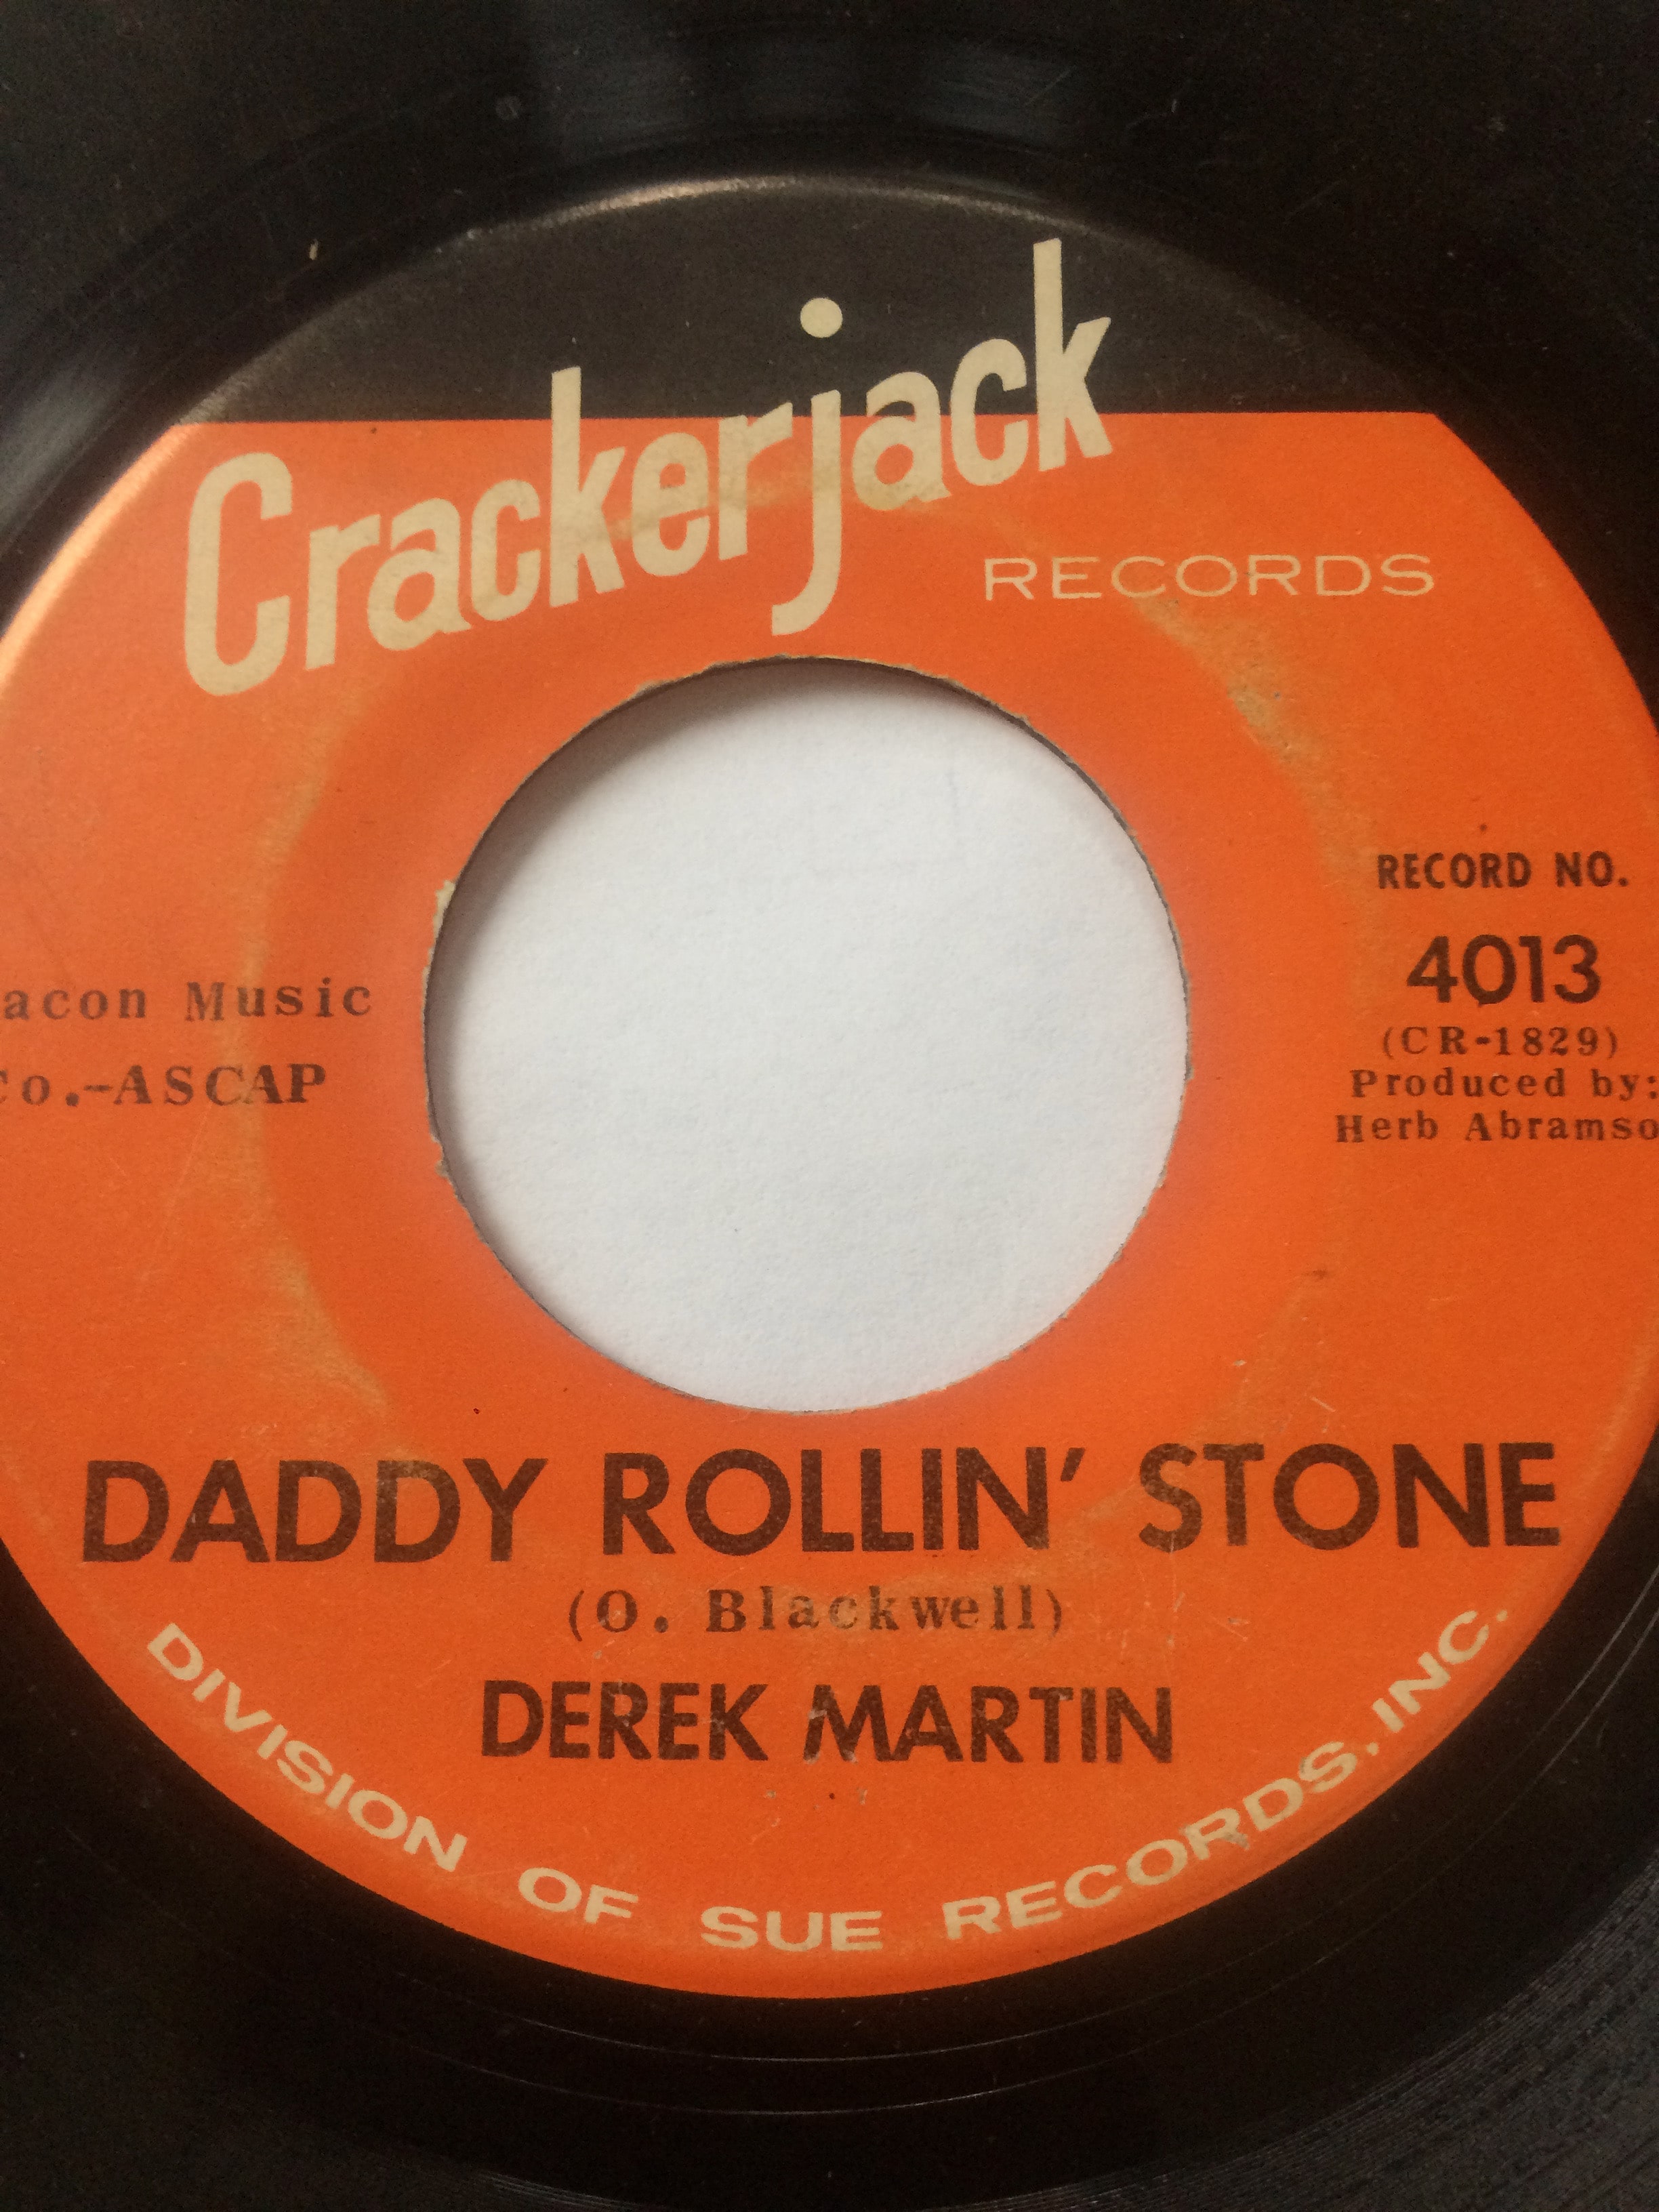 Sell Derek Martin 45 Record